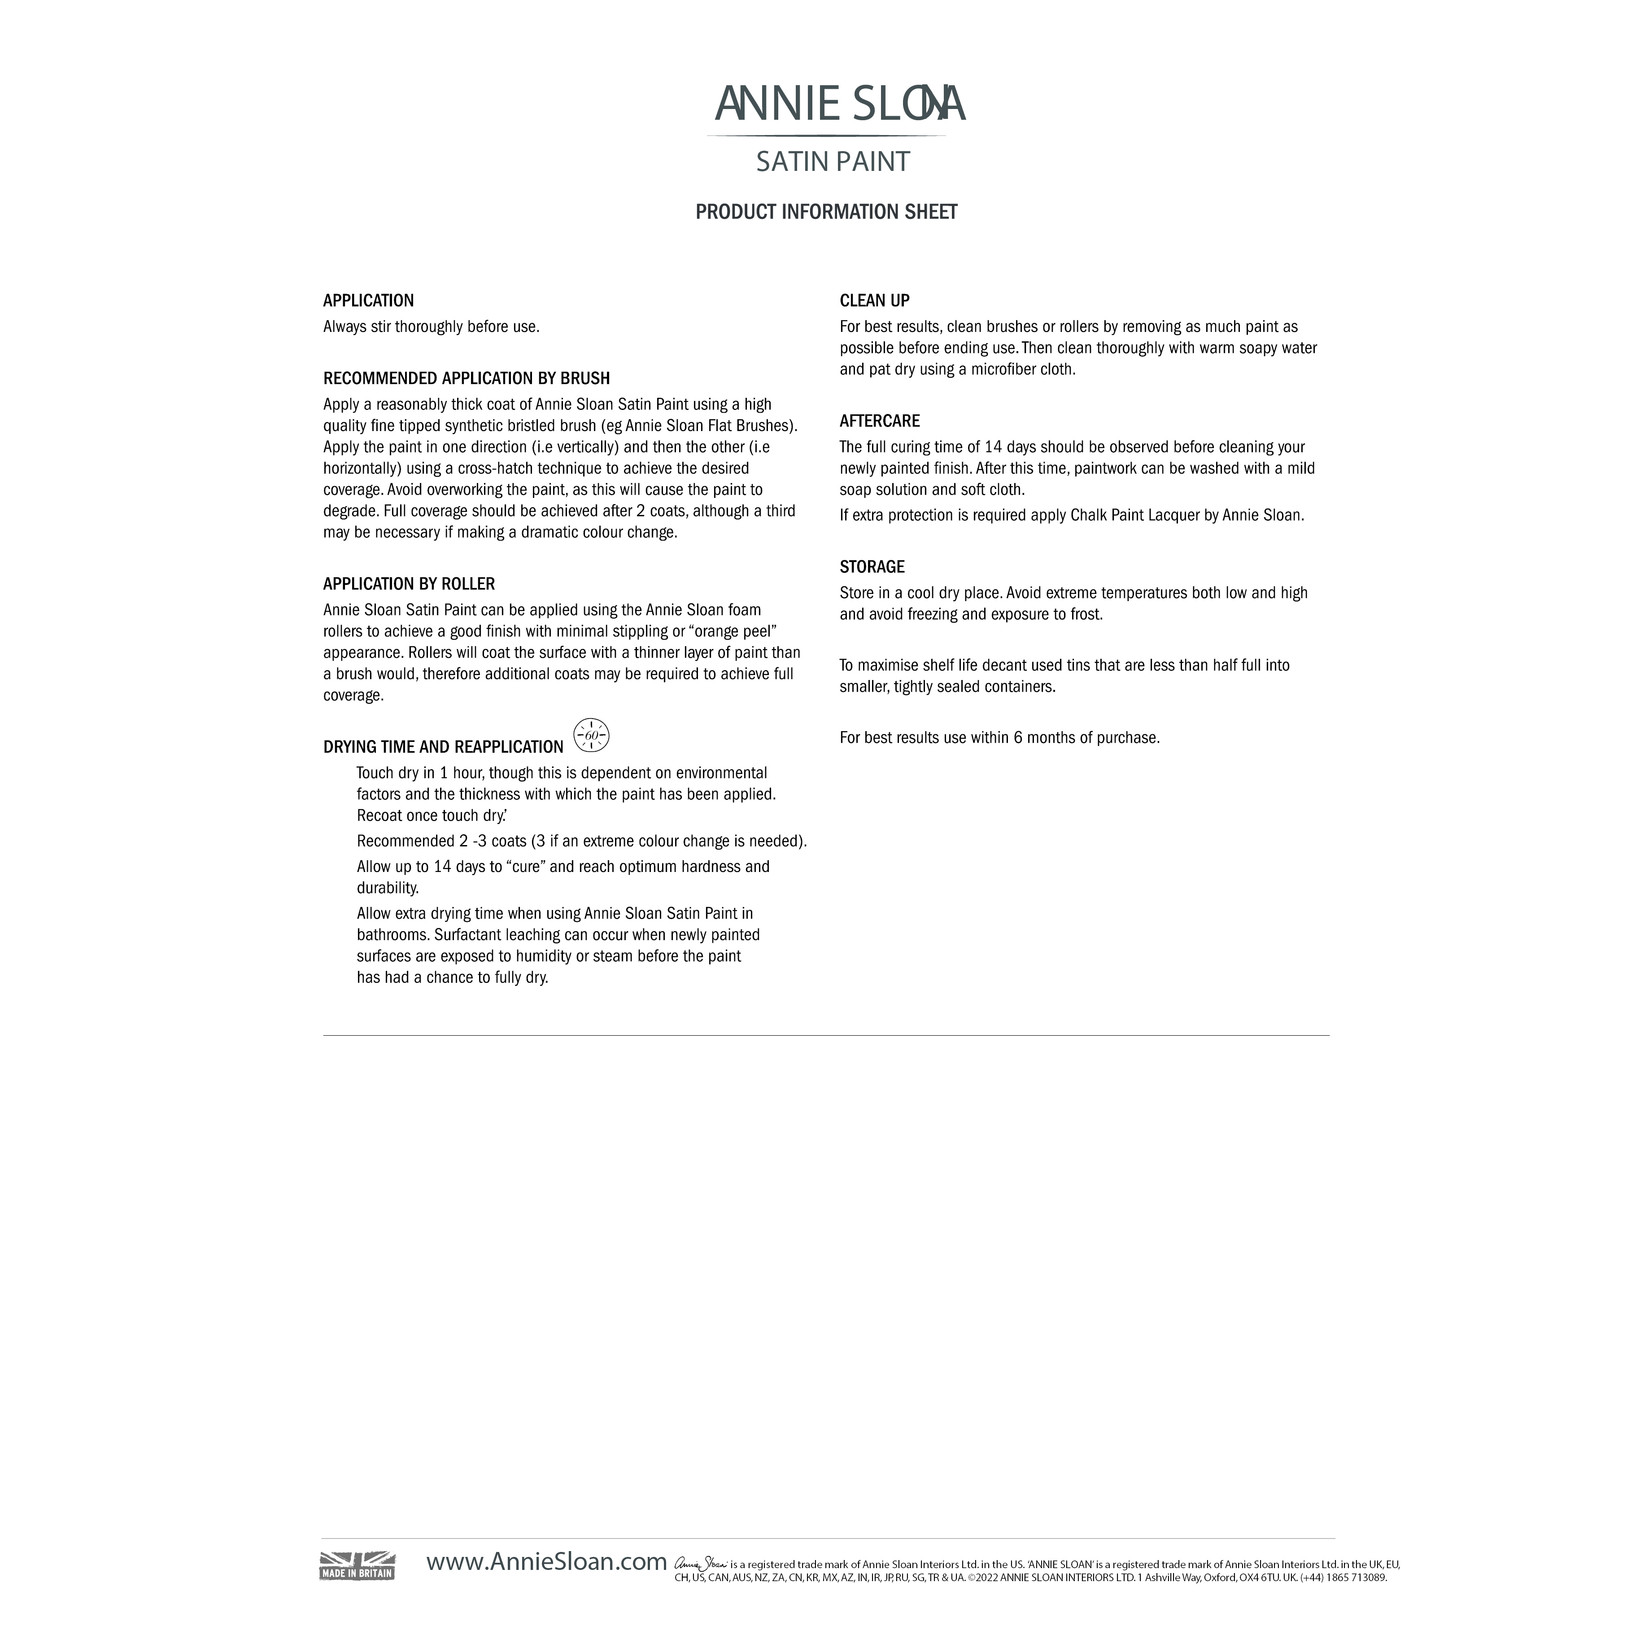 Annie Sloan Annie Sloan French Linen Satin Paint 750ml